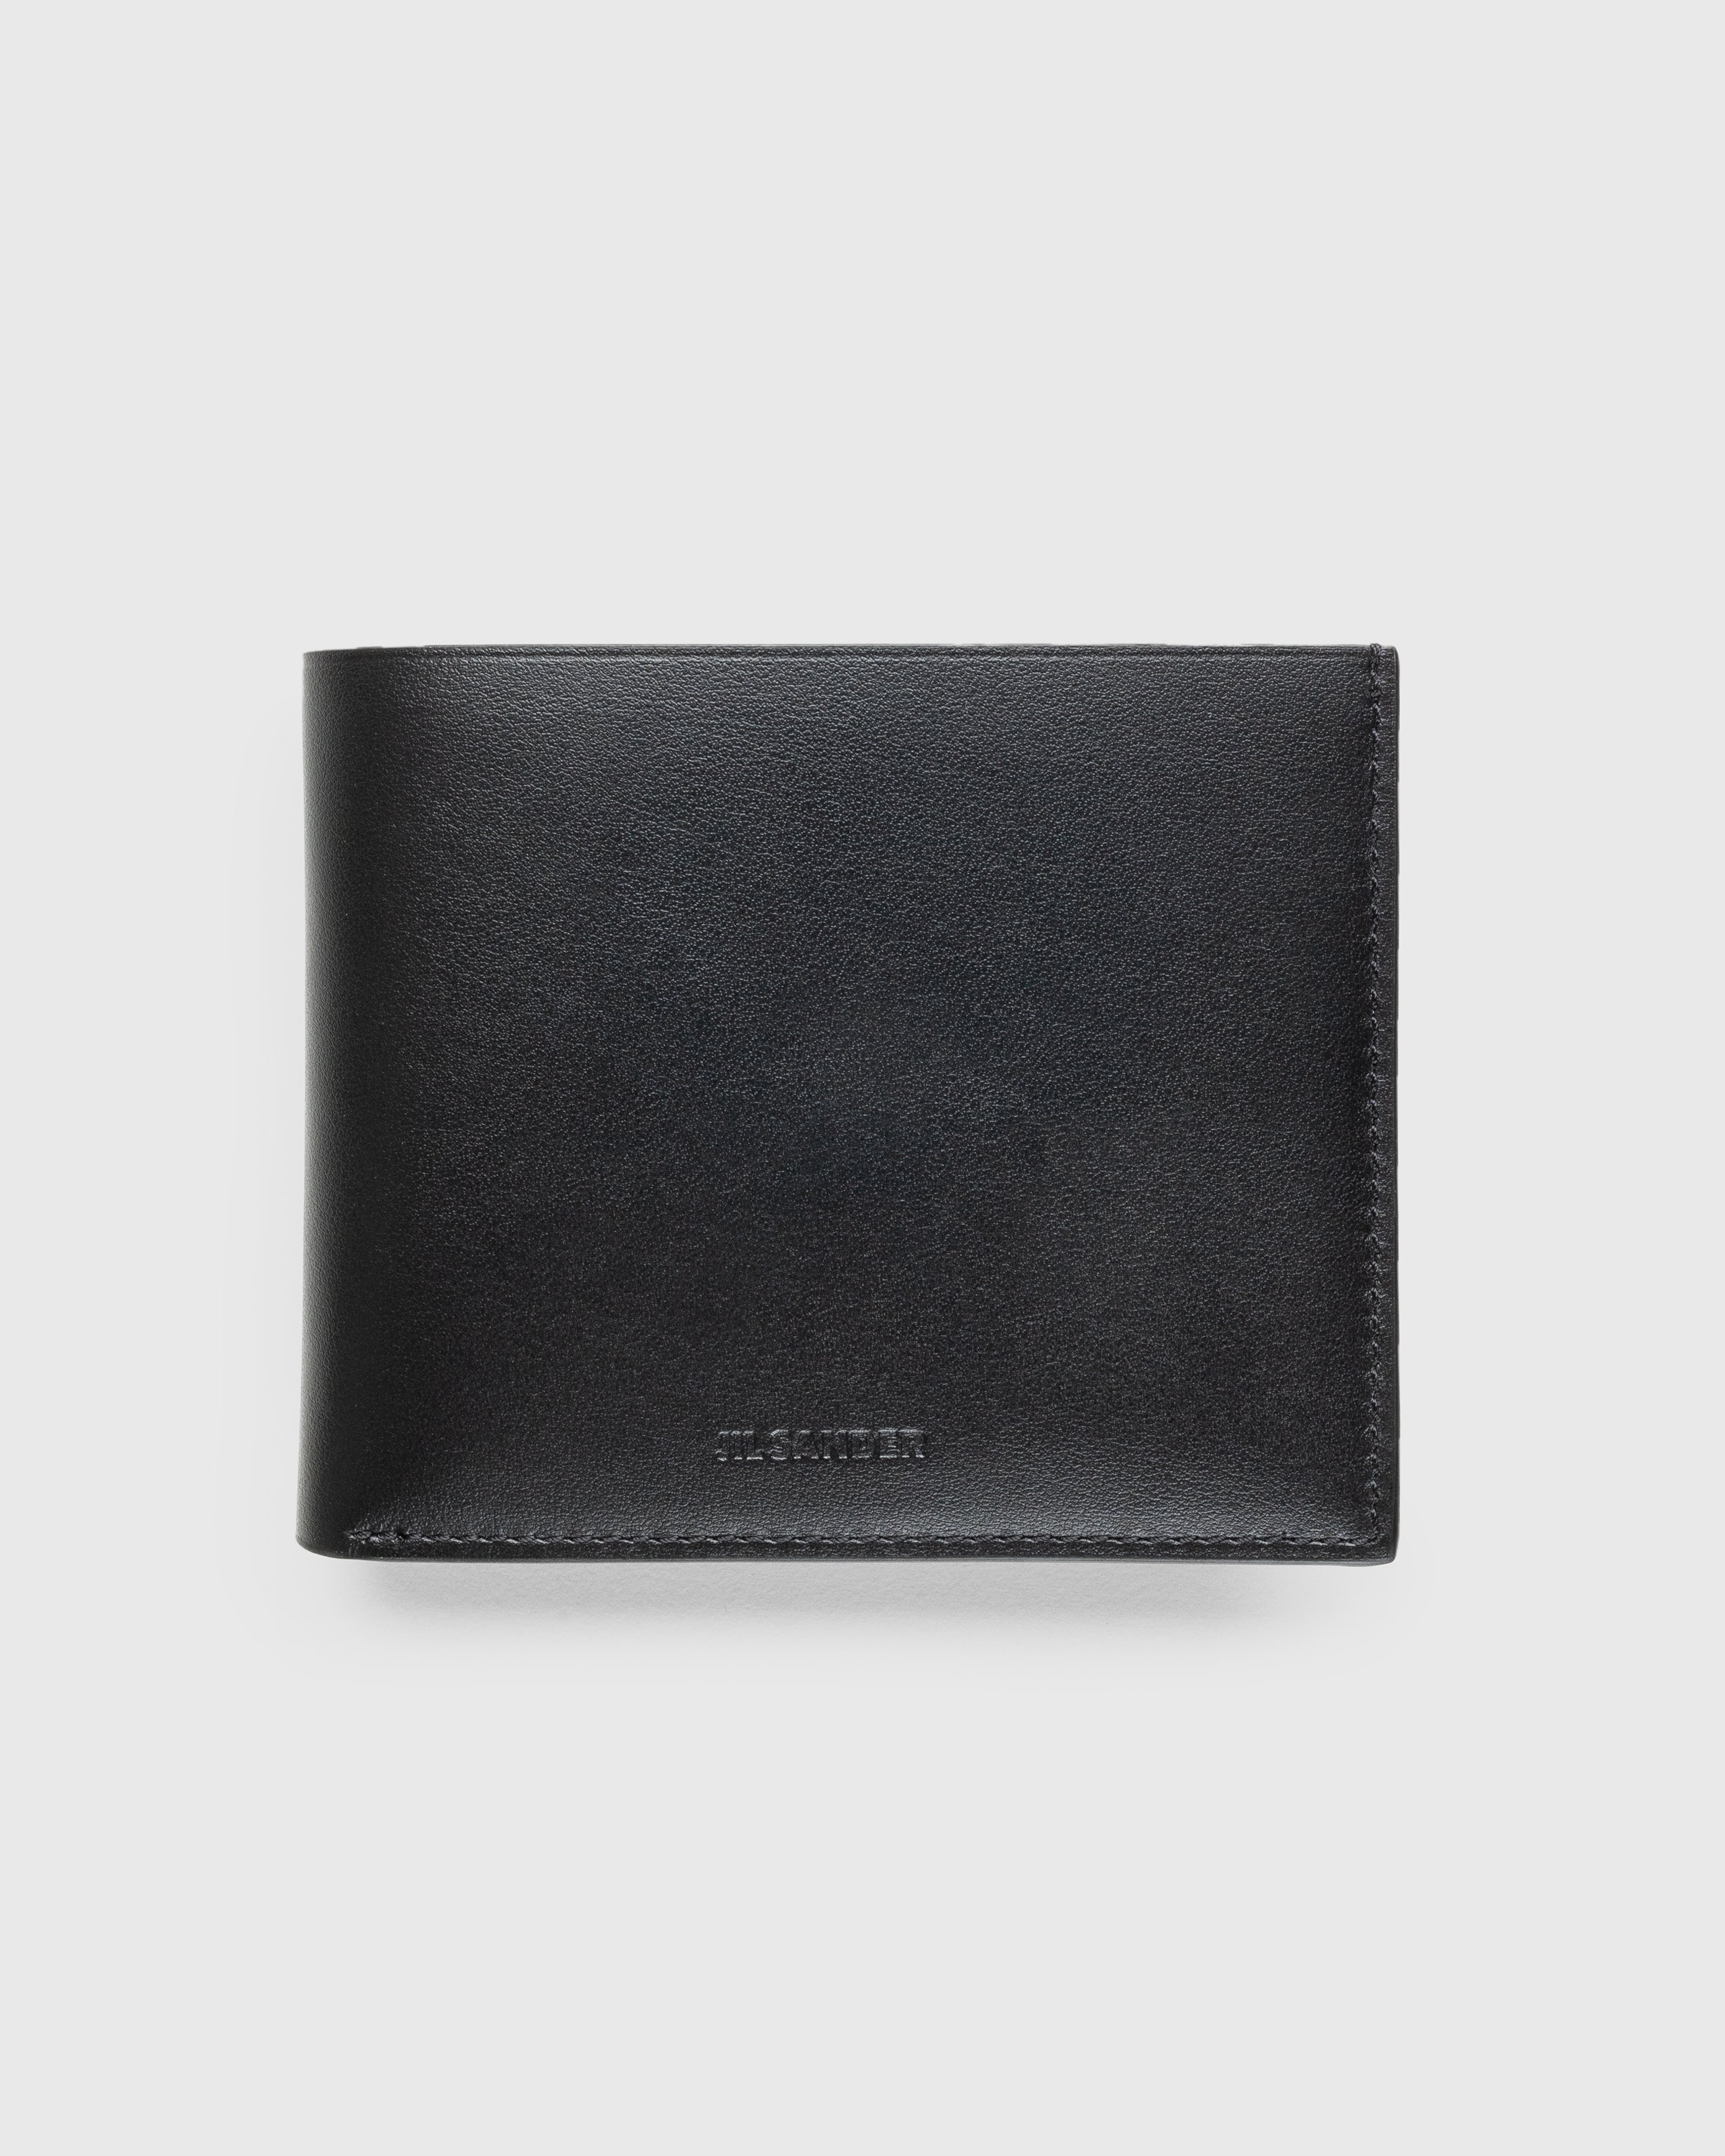 Jil Sander - Zip Pocket Wallet Black - Accessories - Black - Image 1